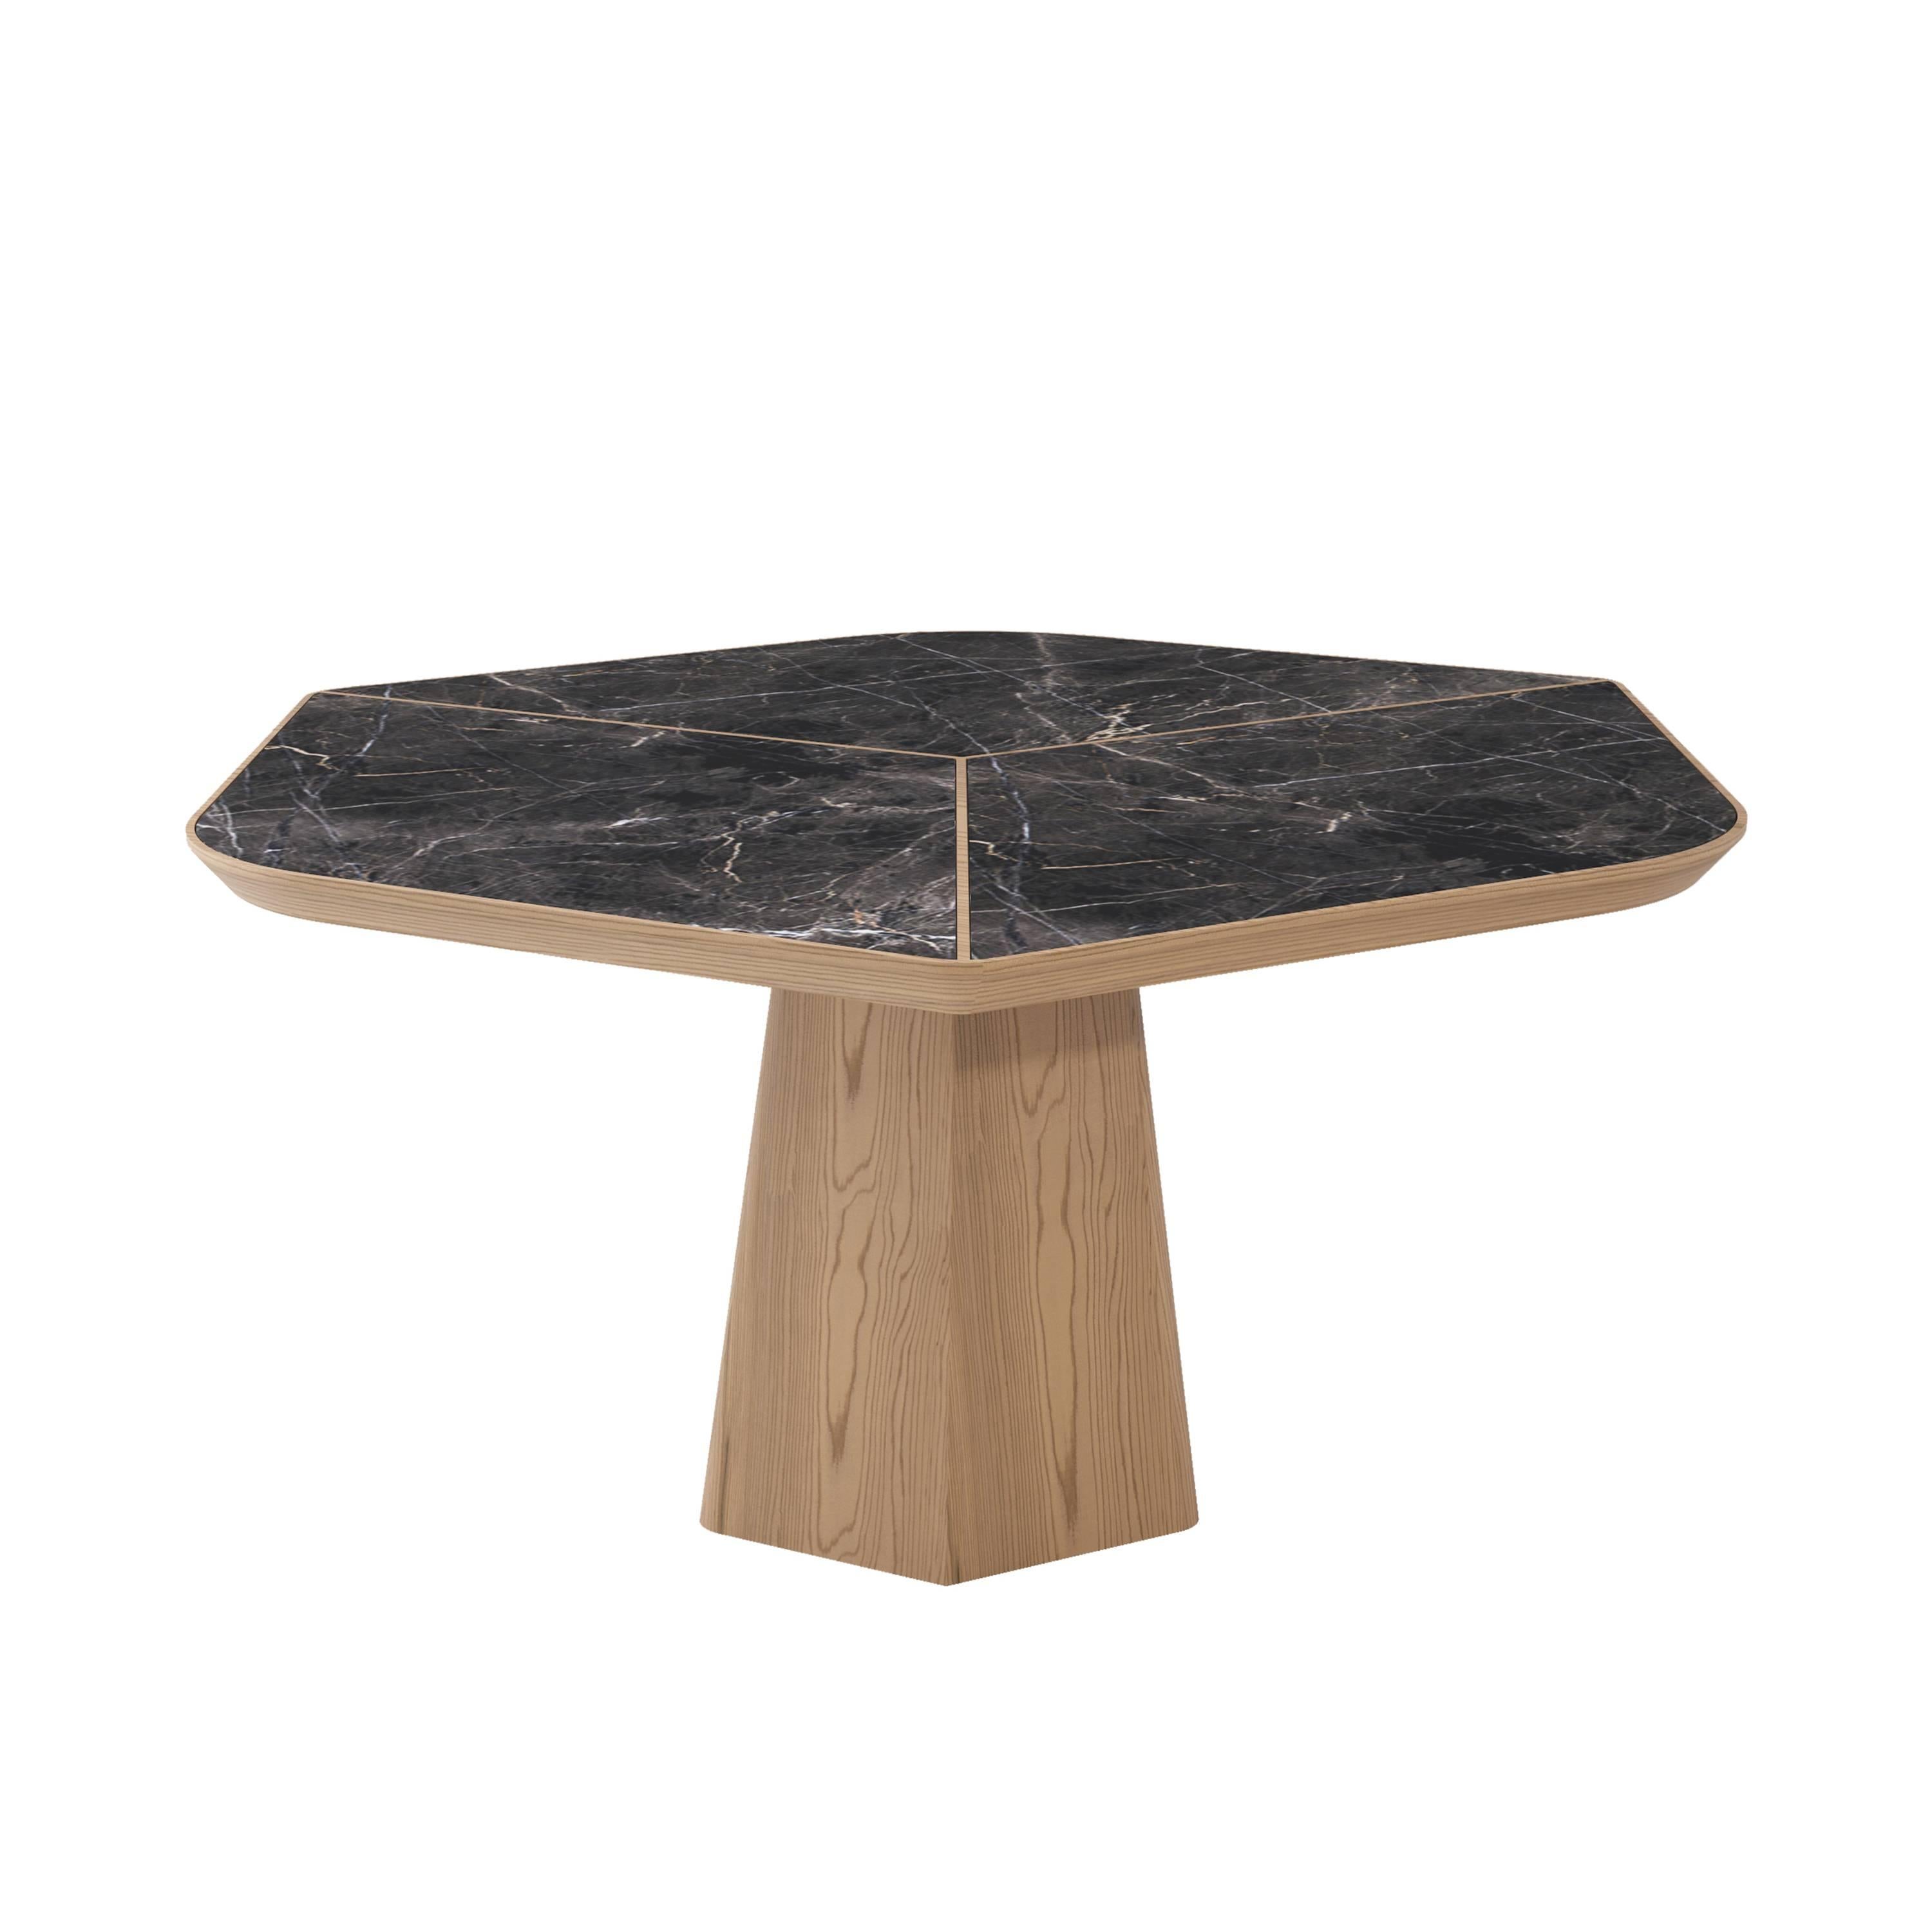 21st Century, Modern, Wood, Marble, Hexagonal, Sculptural, Evolve Dining Table